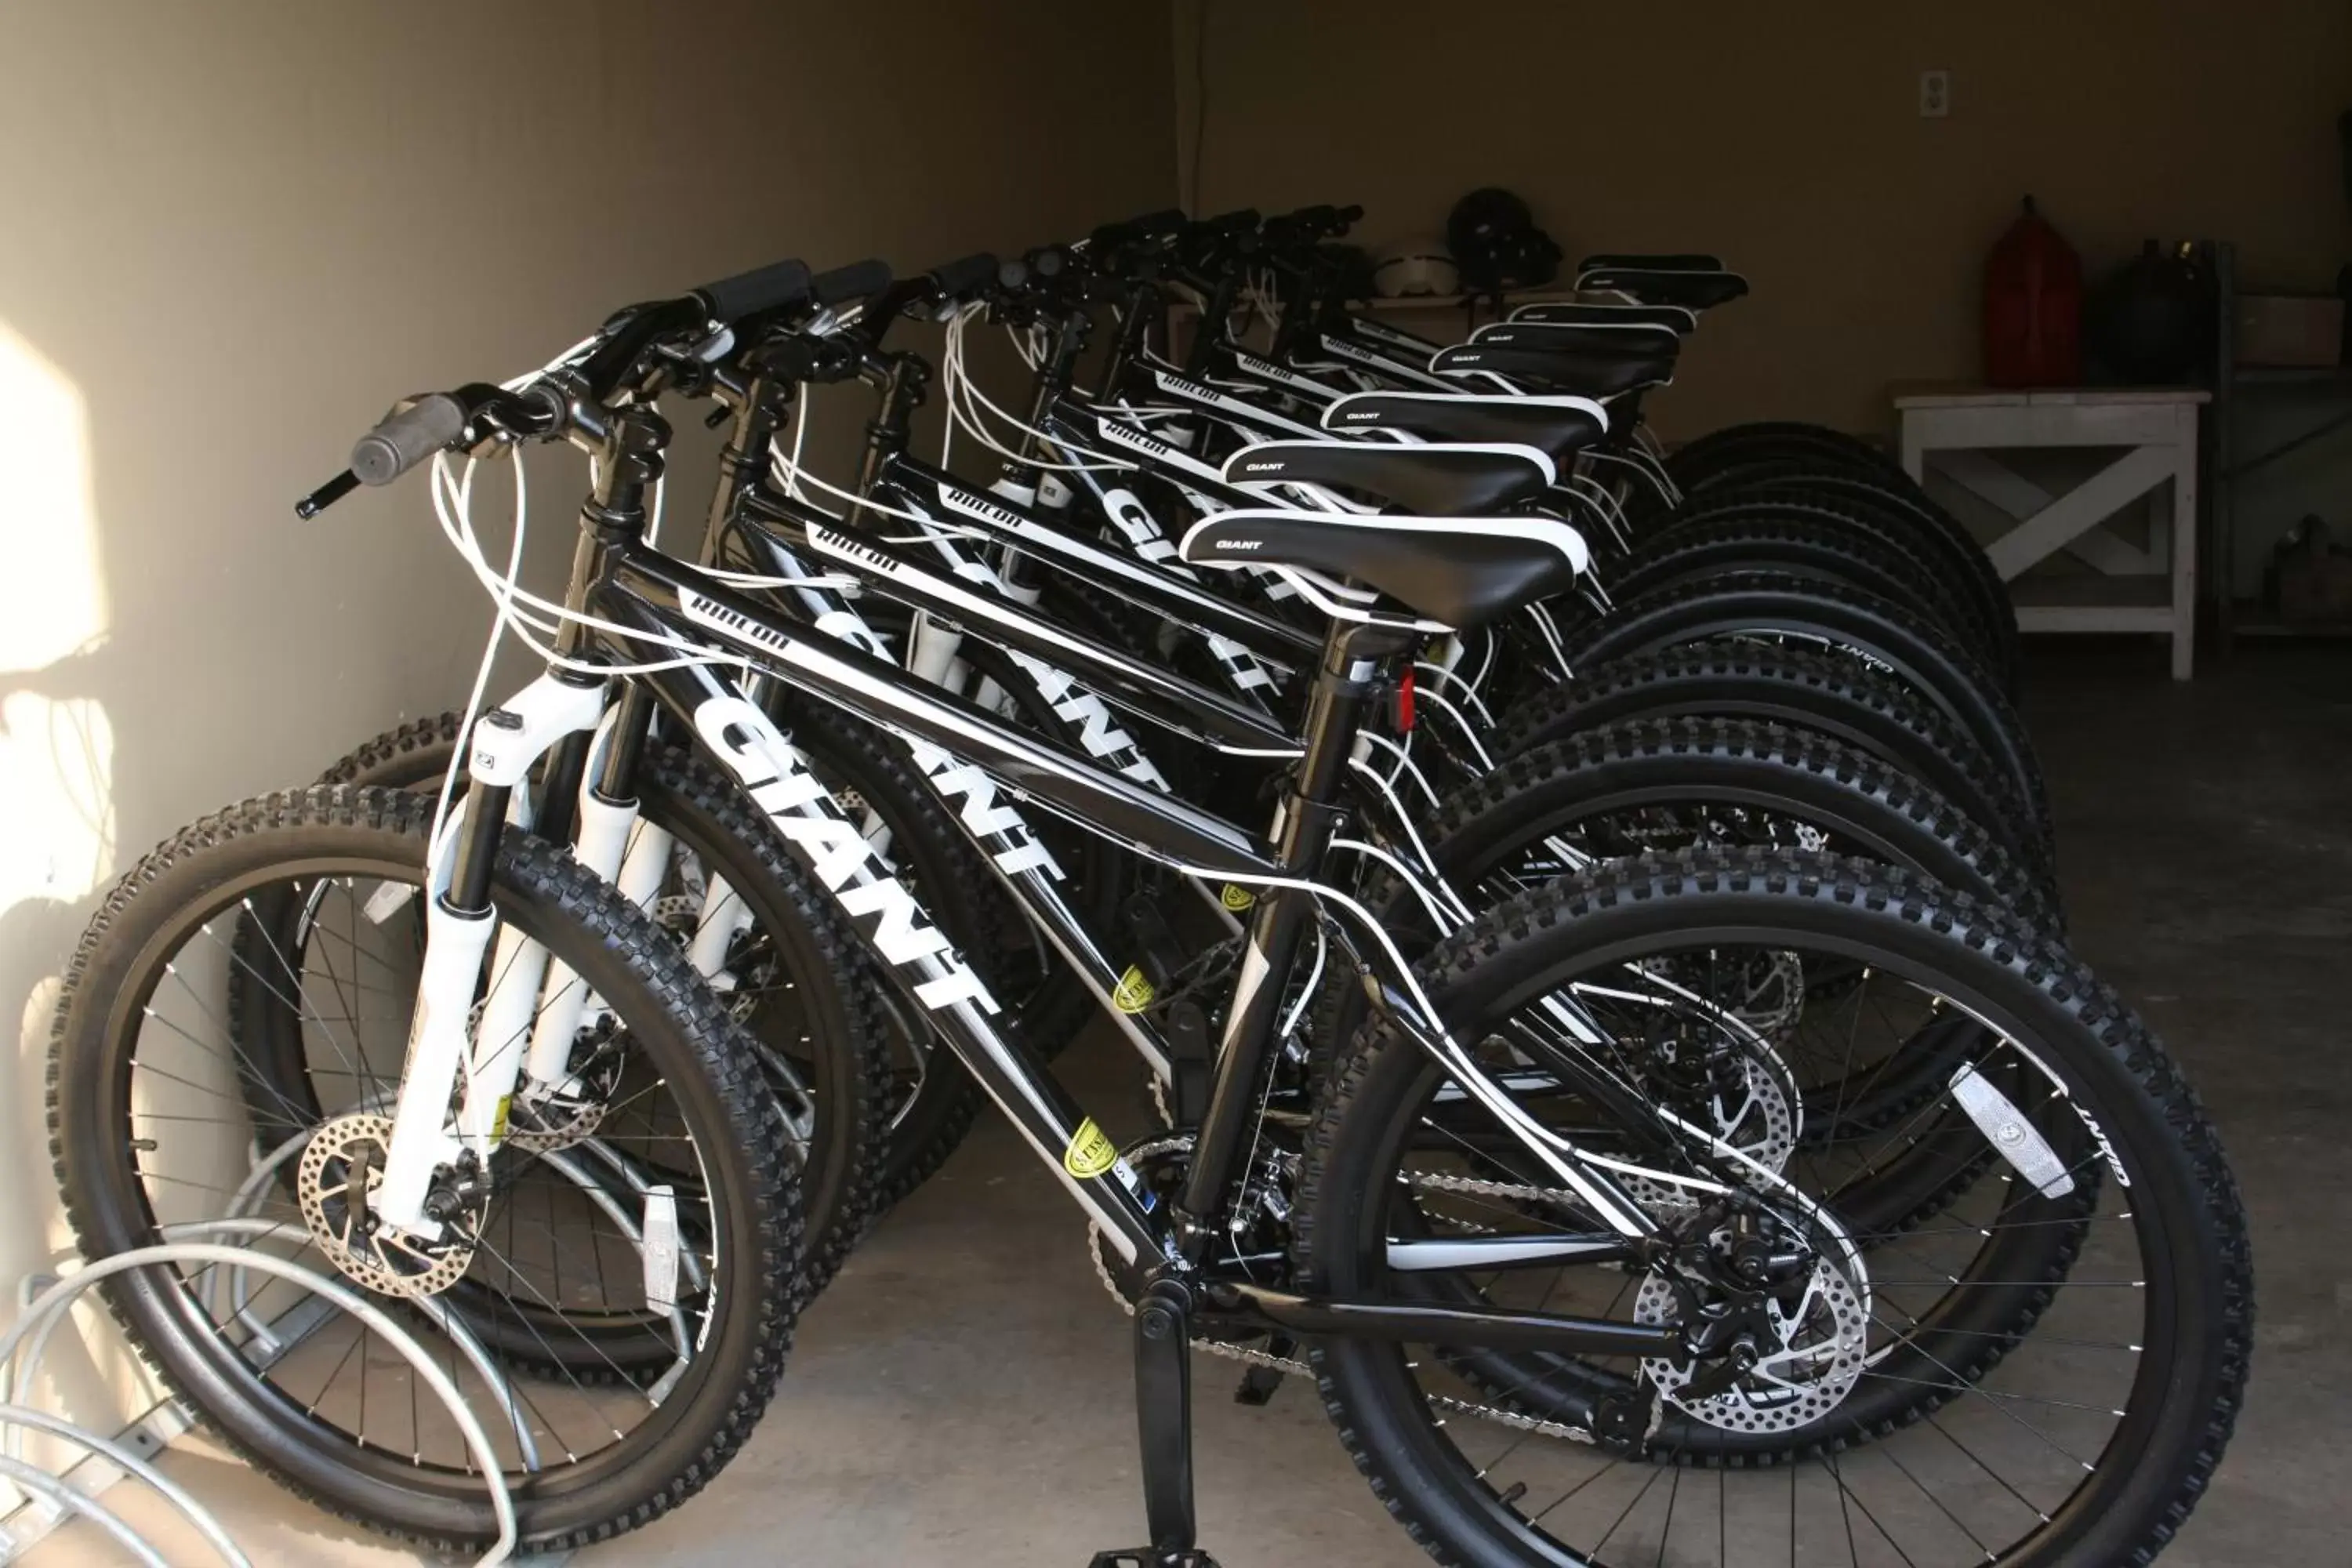 Cycling, Biking in Southern Cross Guest Ranch